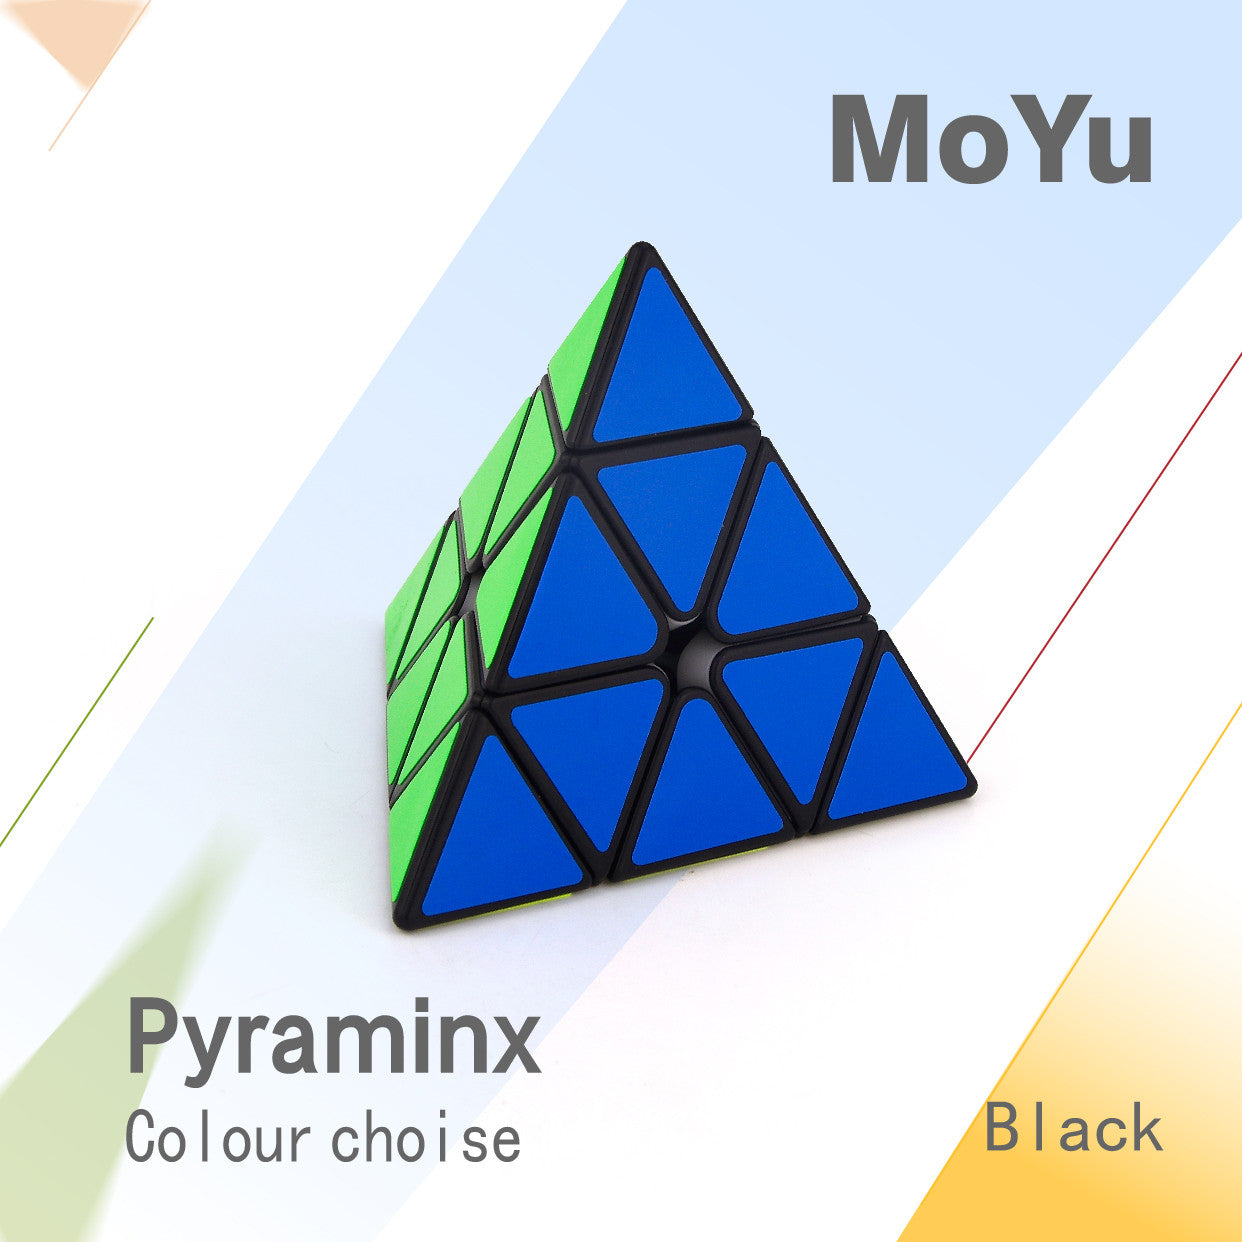 Moyu Mofang Jiaoshi Pyraminx Speed Cube (Black)